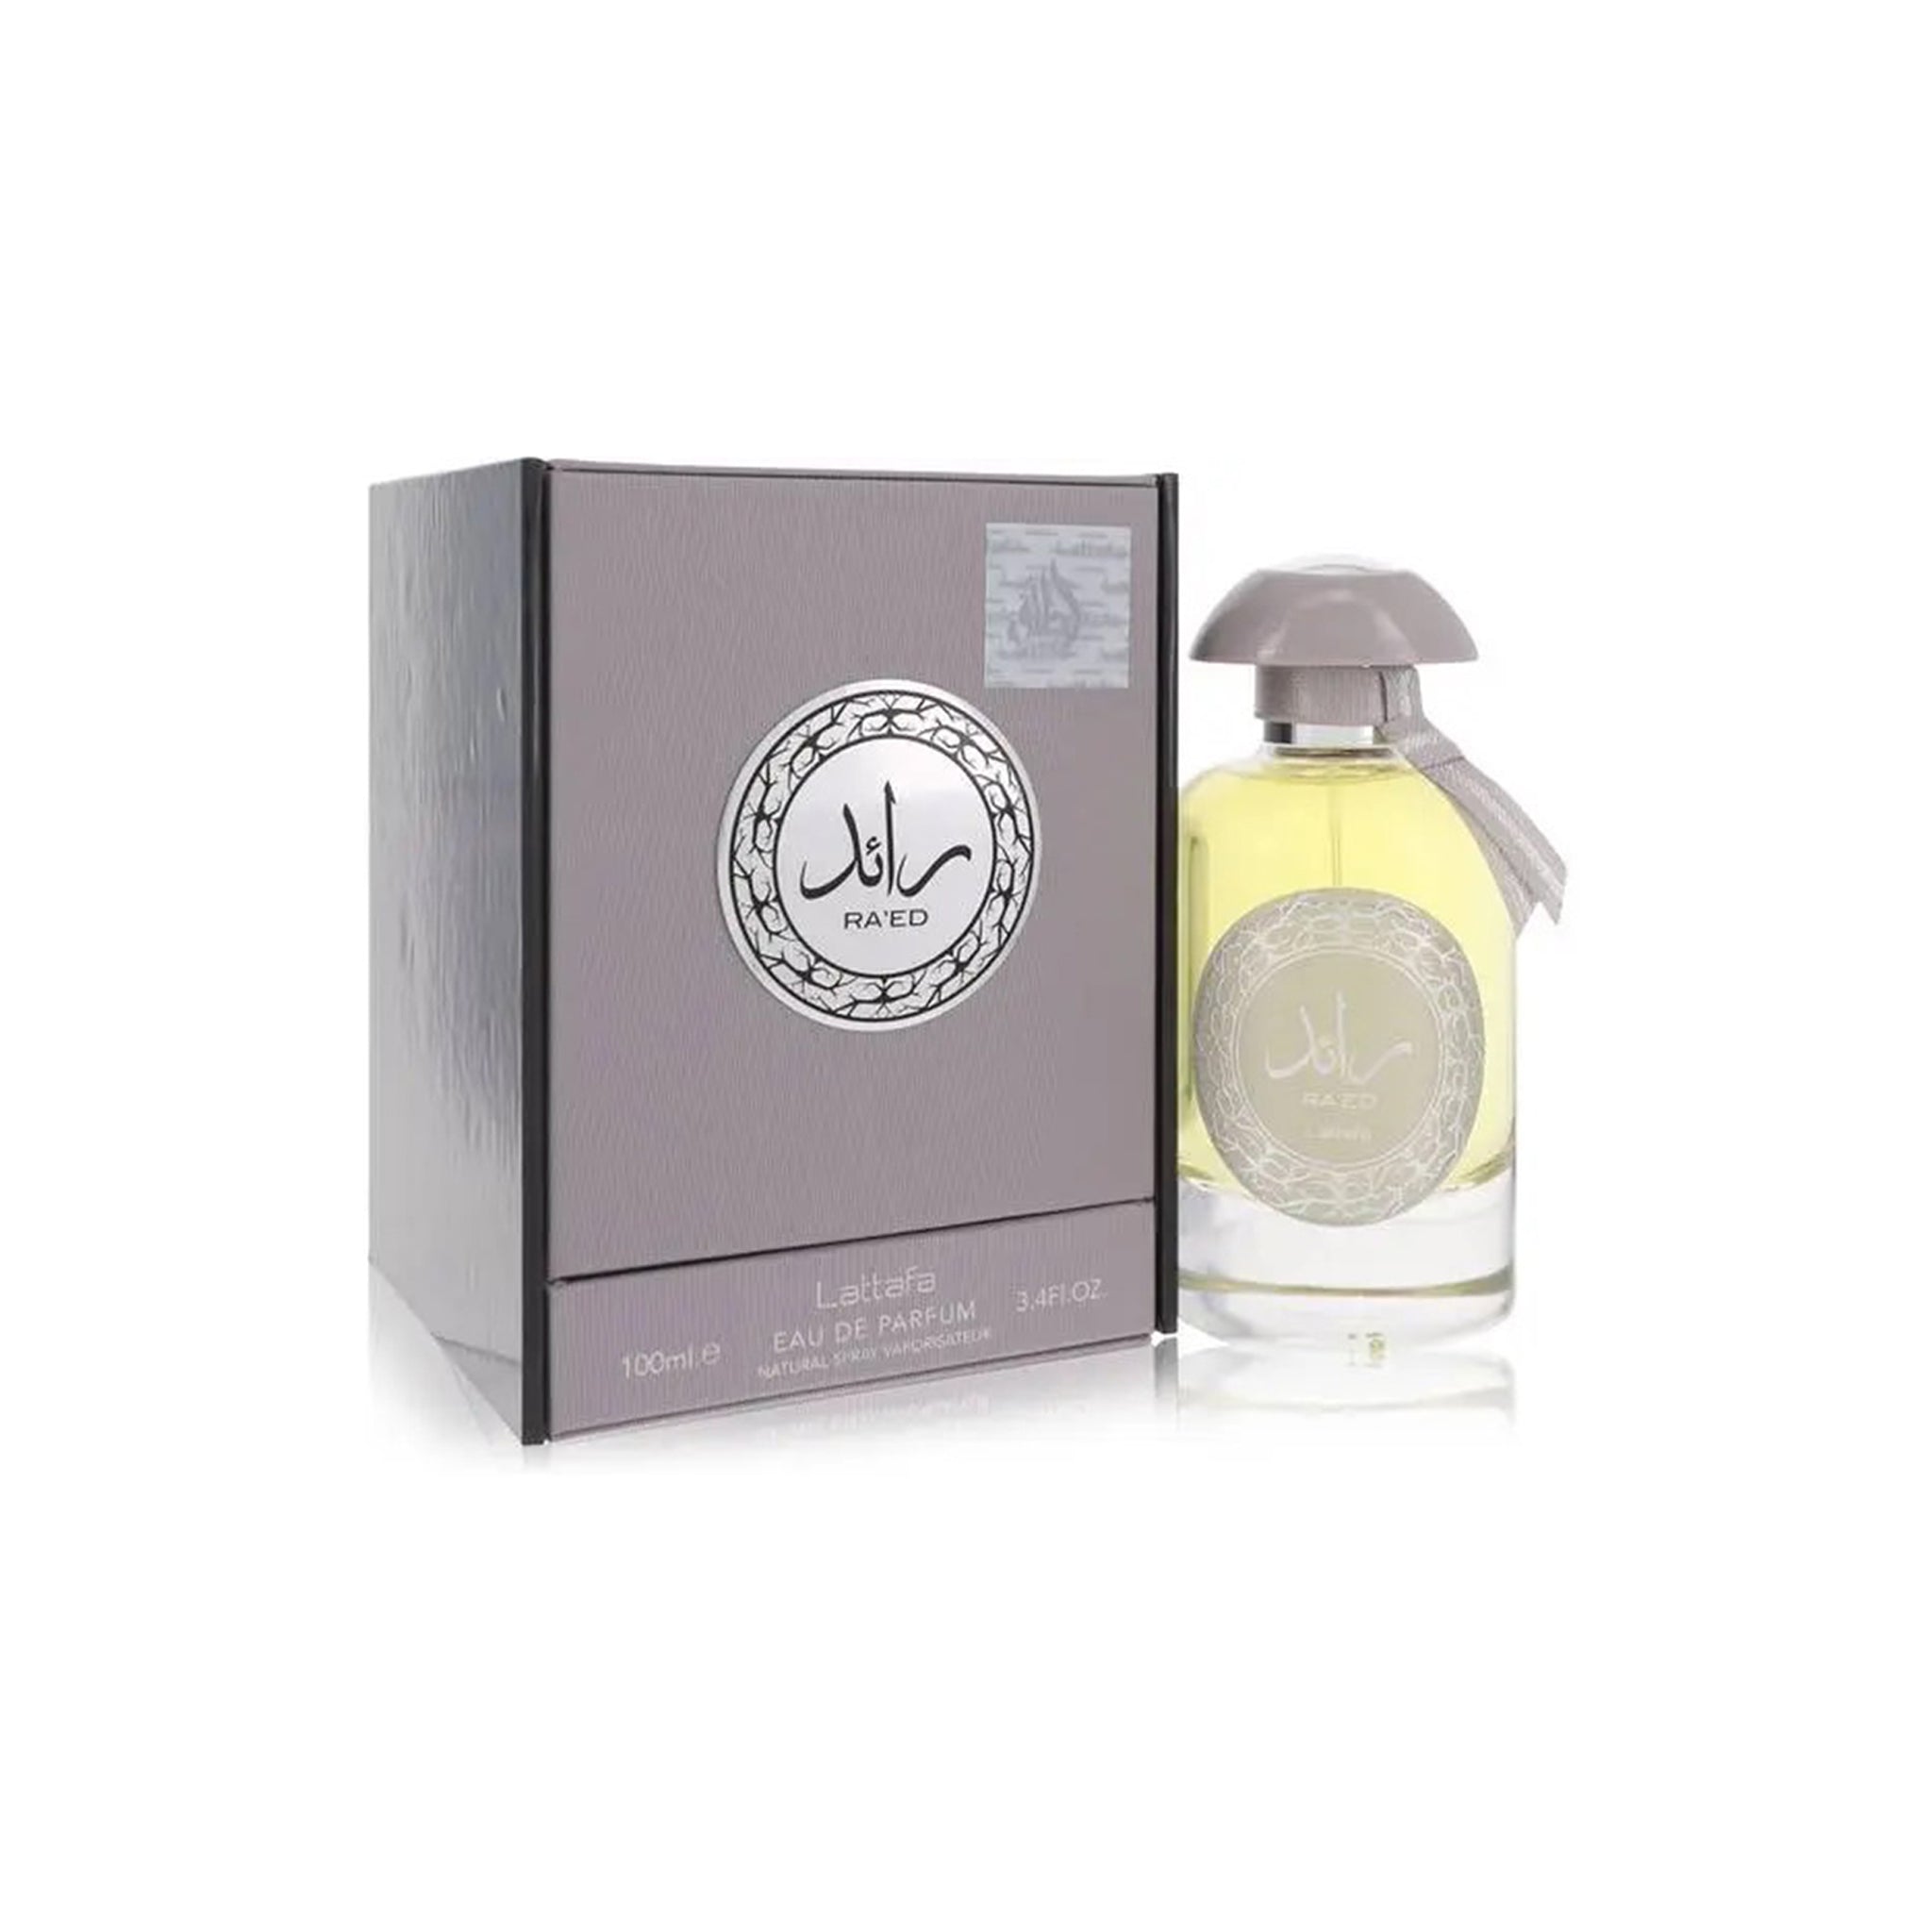 Ra'ed Silver Eau De Parfum Spray (Unisex) 100ml by Lattafa